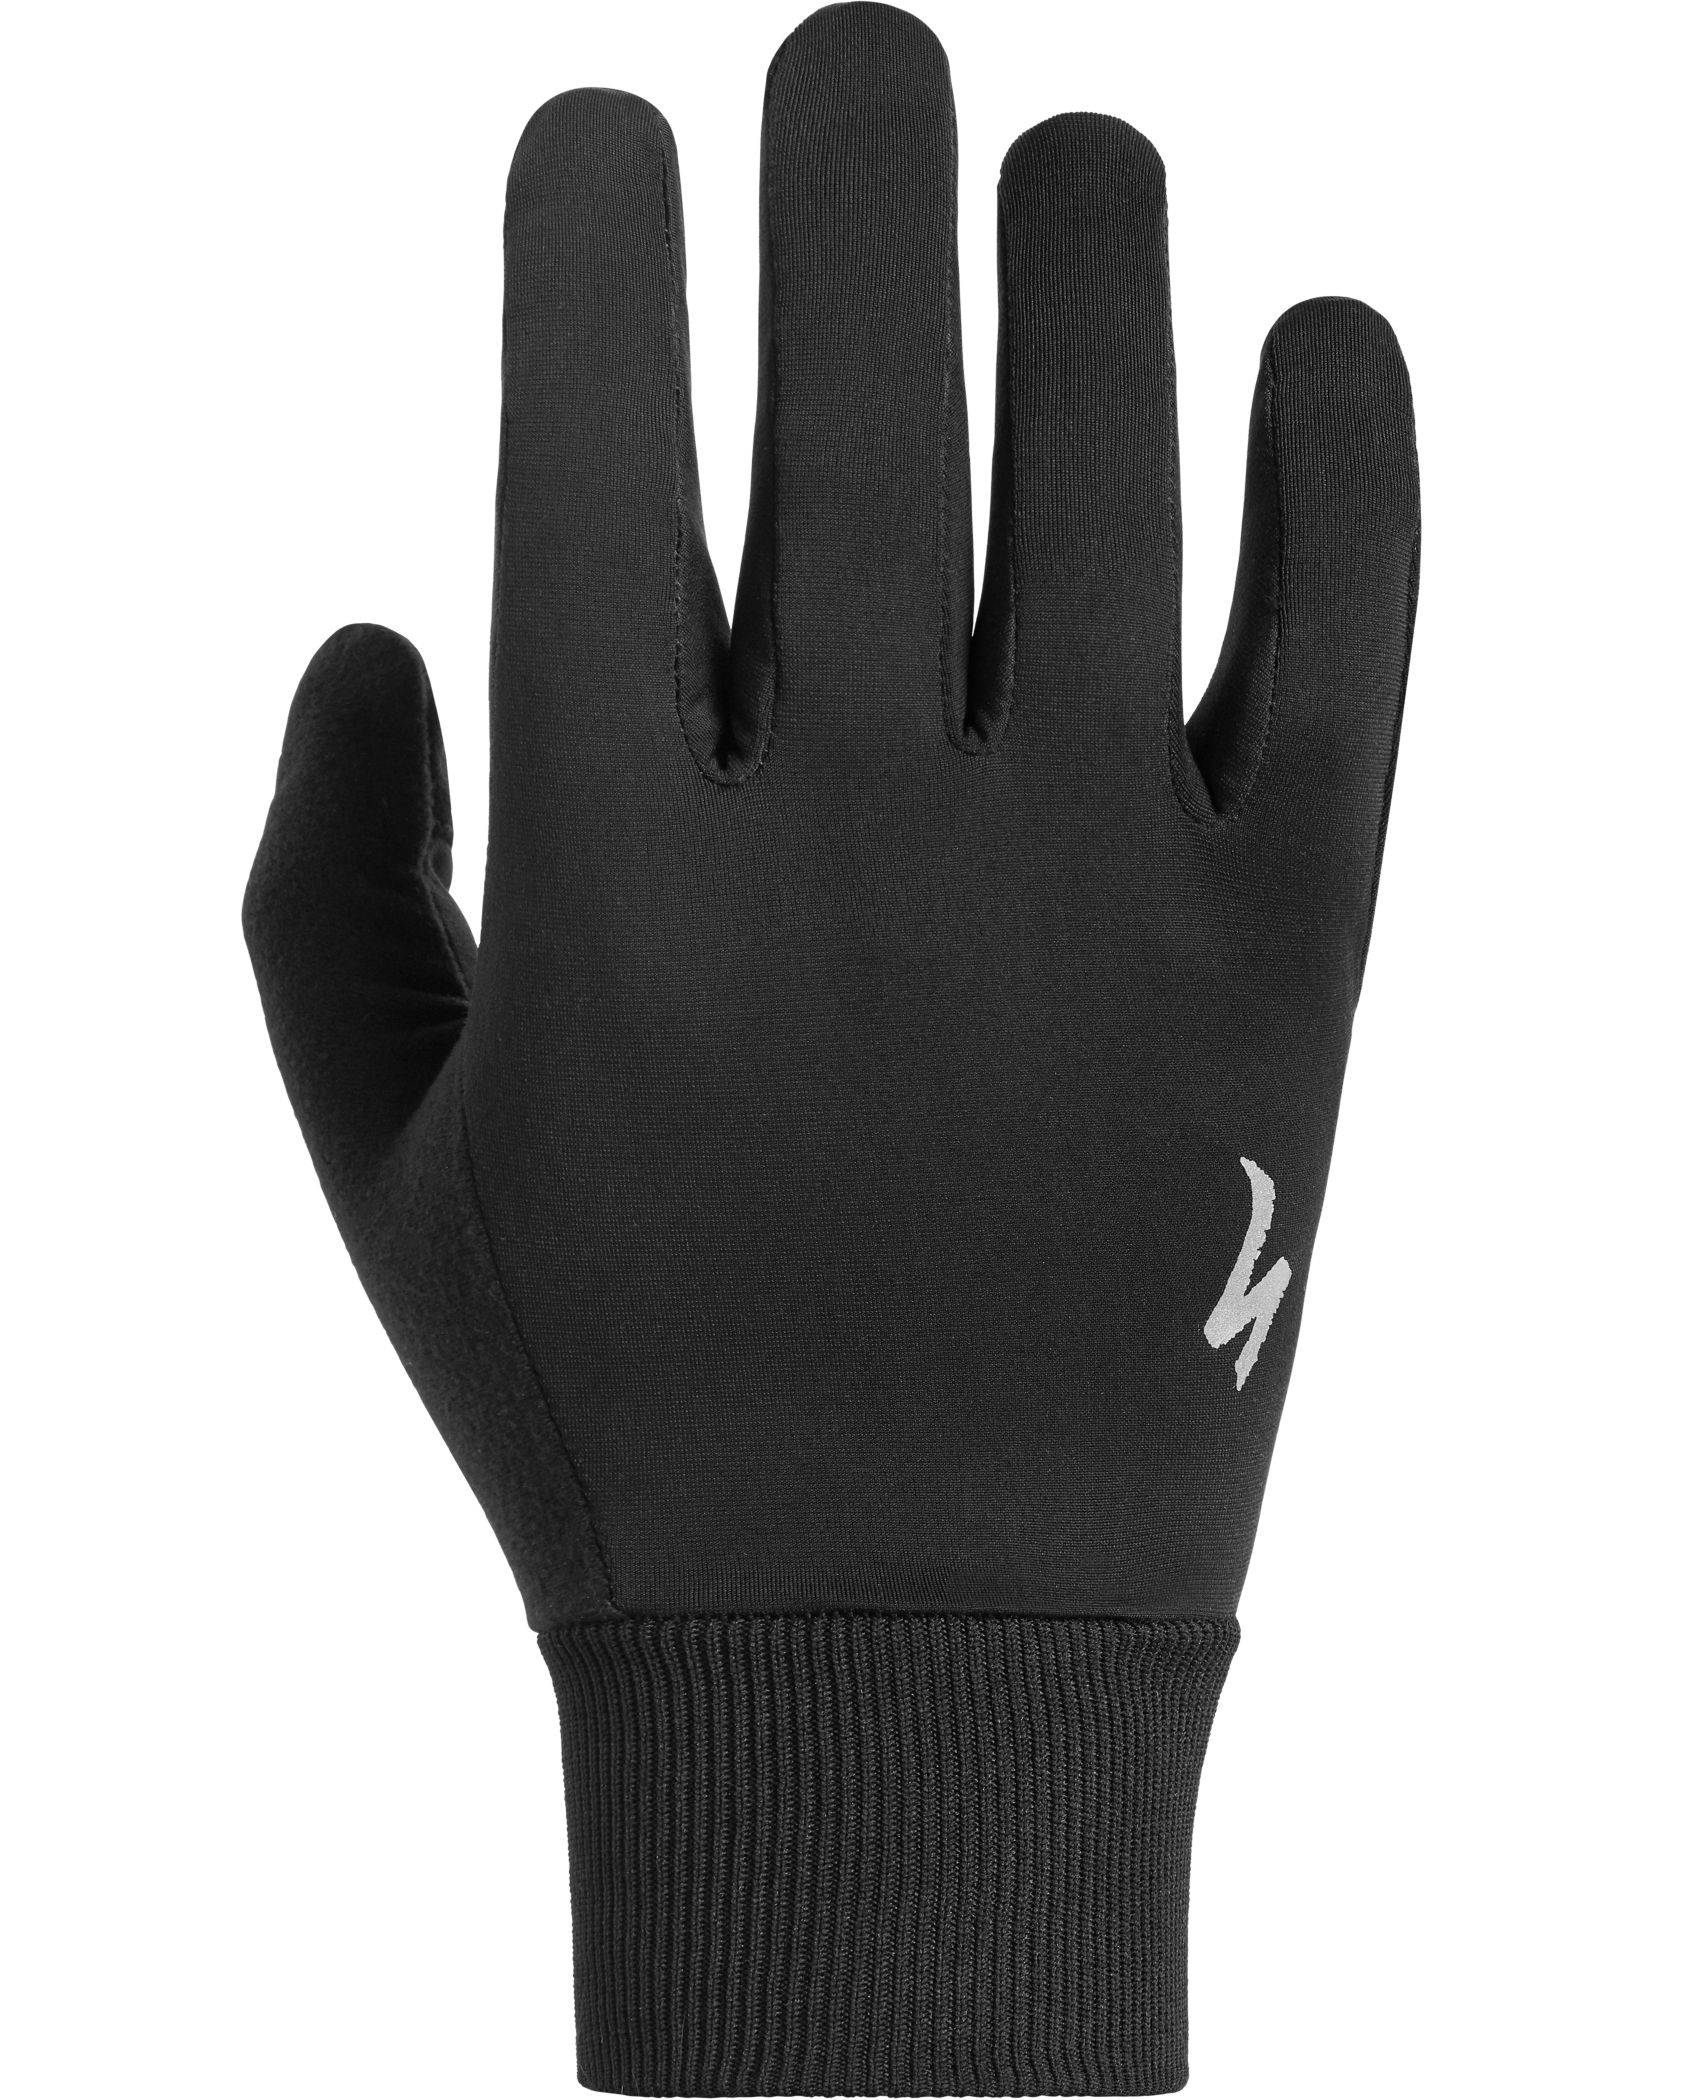 specialized gloves uk